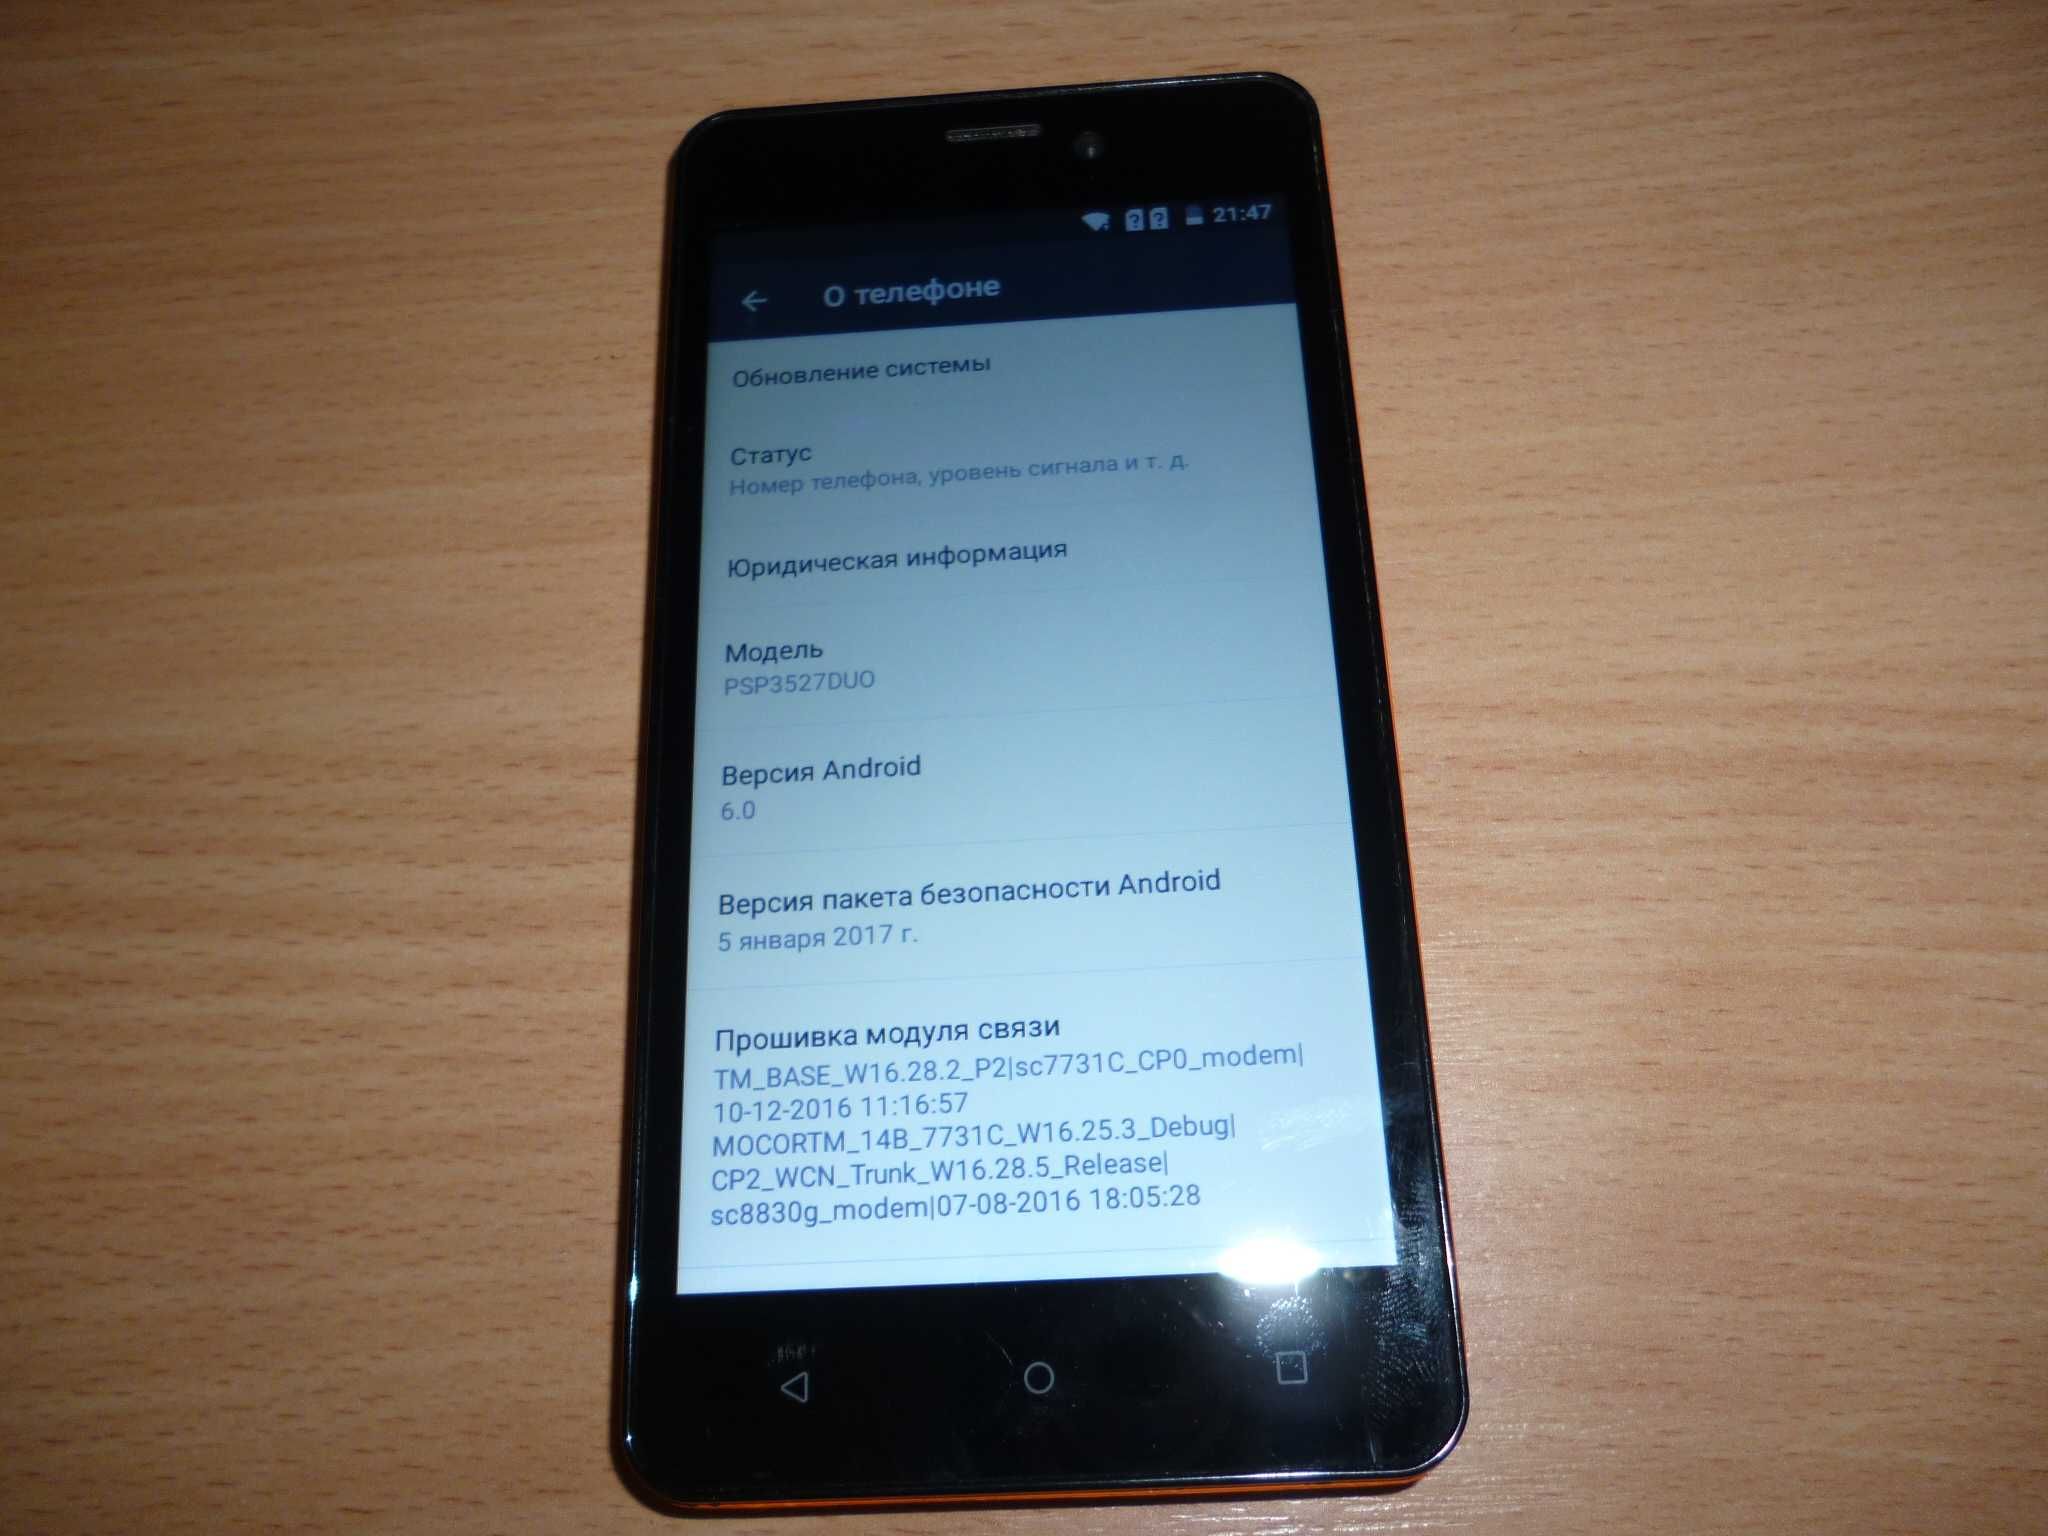 мобильный телефон psp3527duo Pŕestigio wize NK3 android 6.0